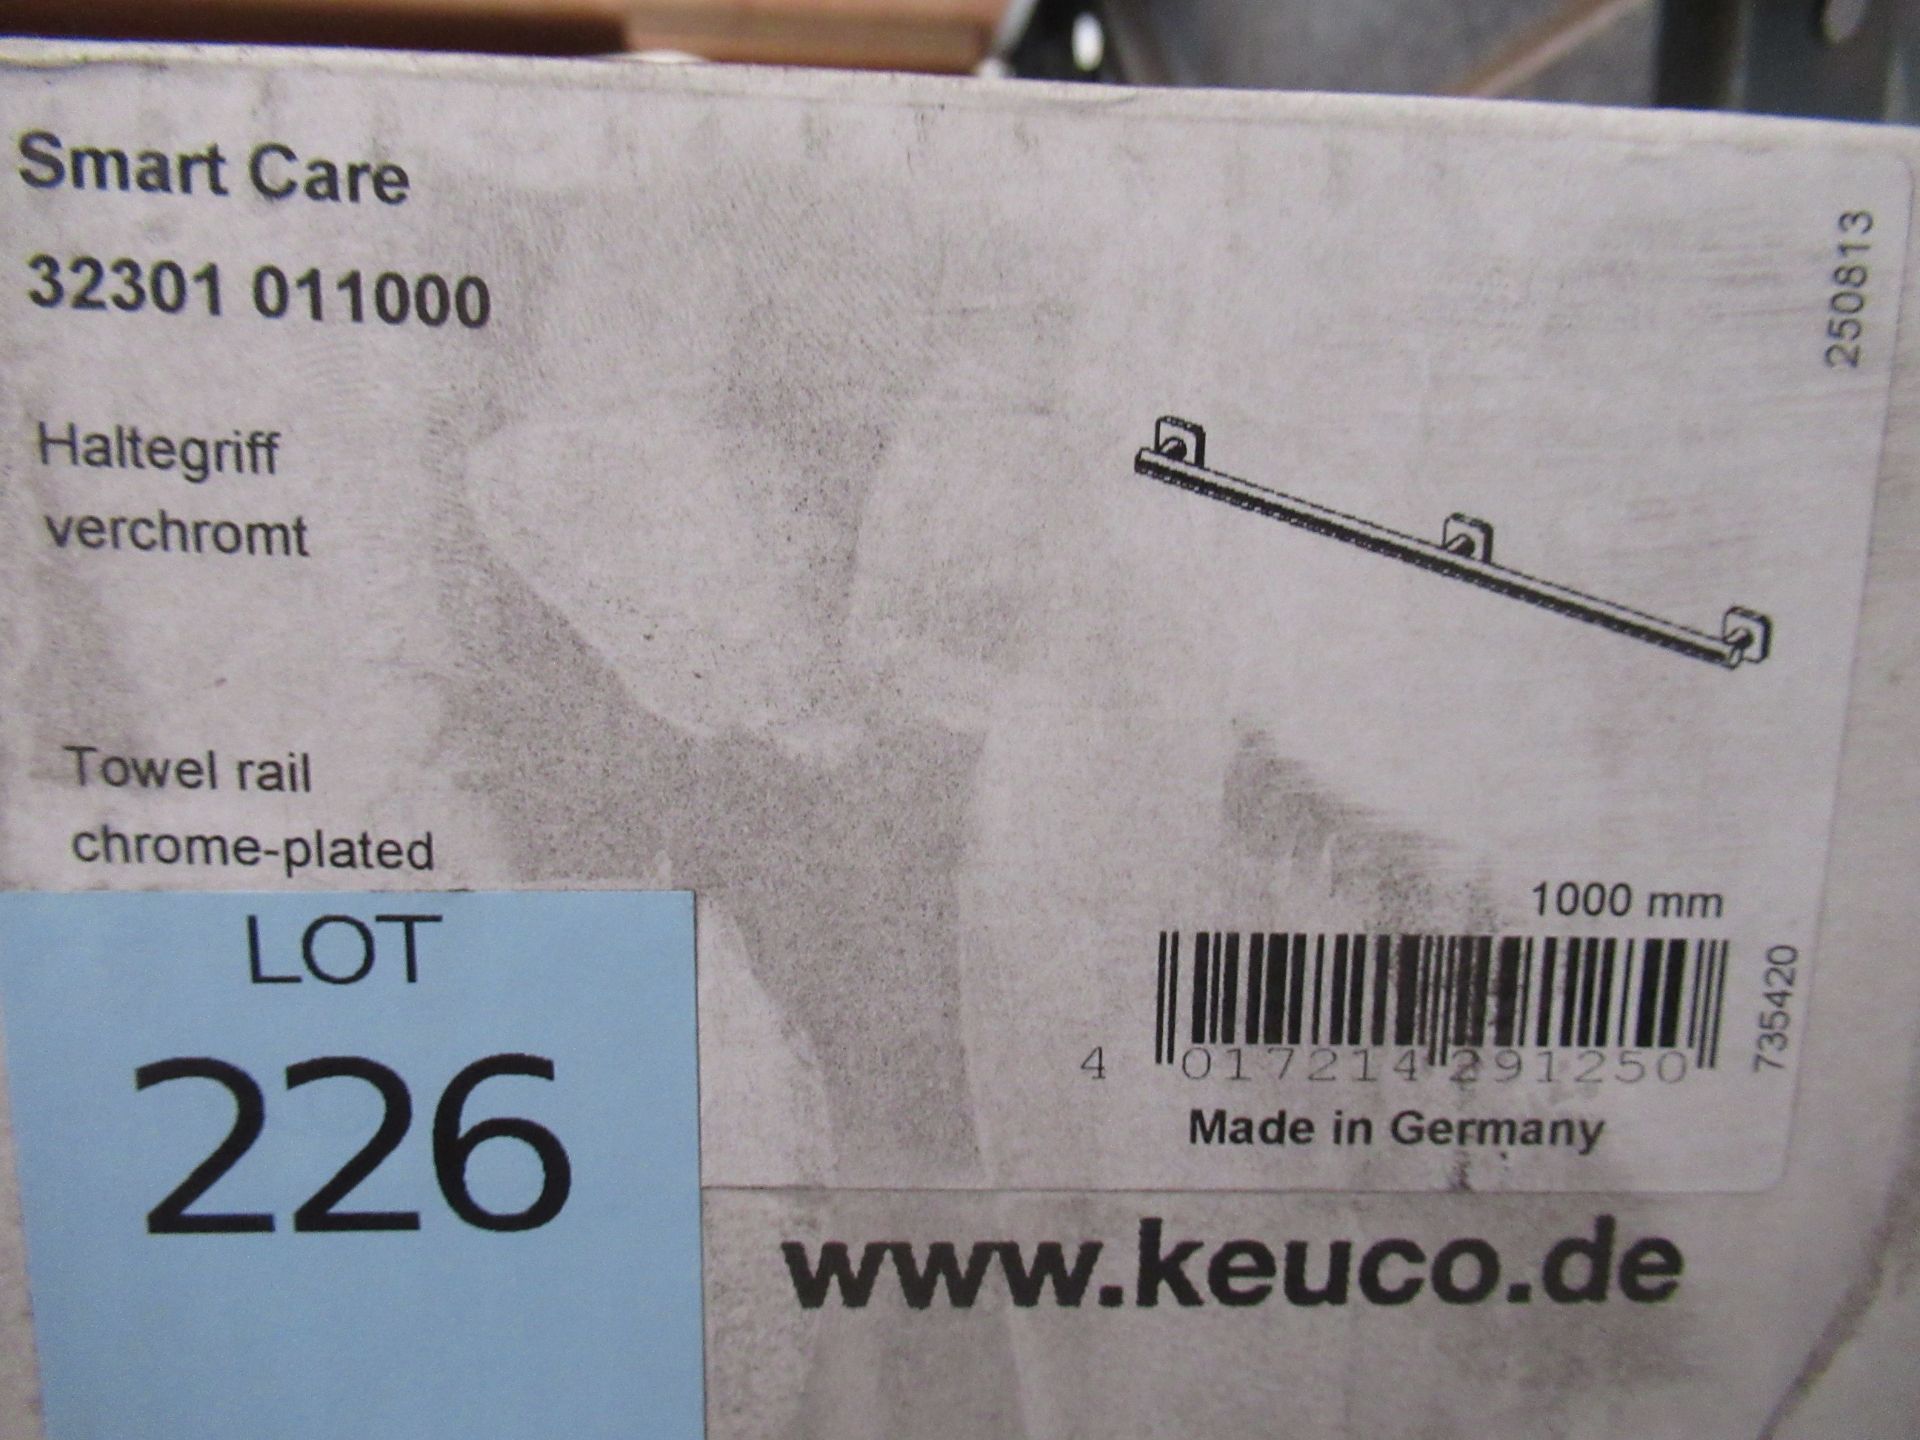 A Keuco Smart Care Towel Rail 1000mm, Chrome Plated, P/N 32301-011000